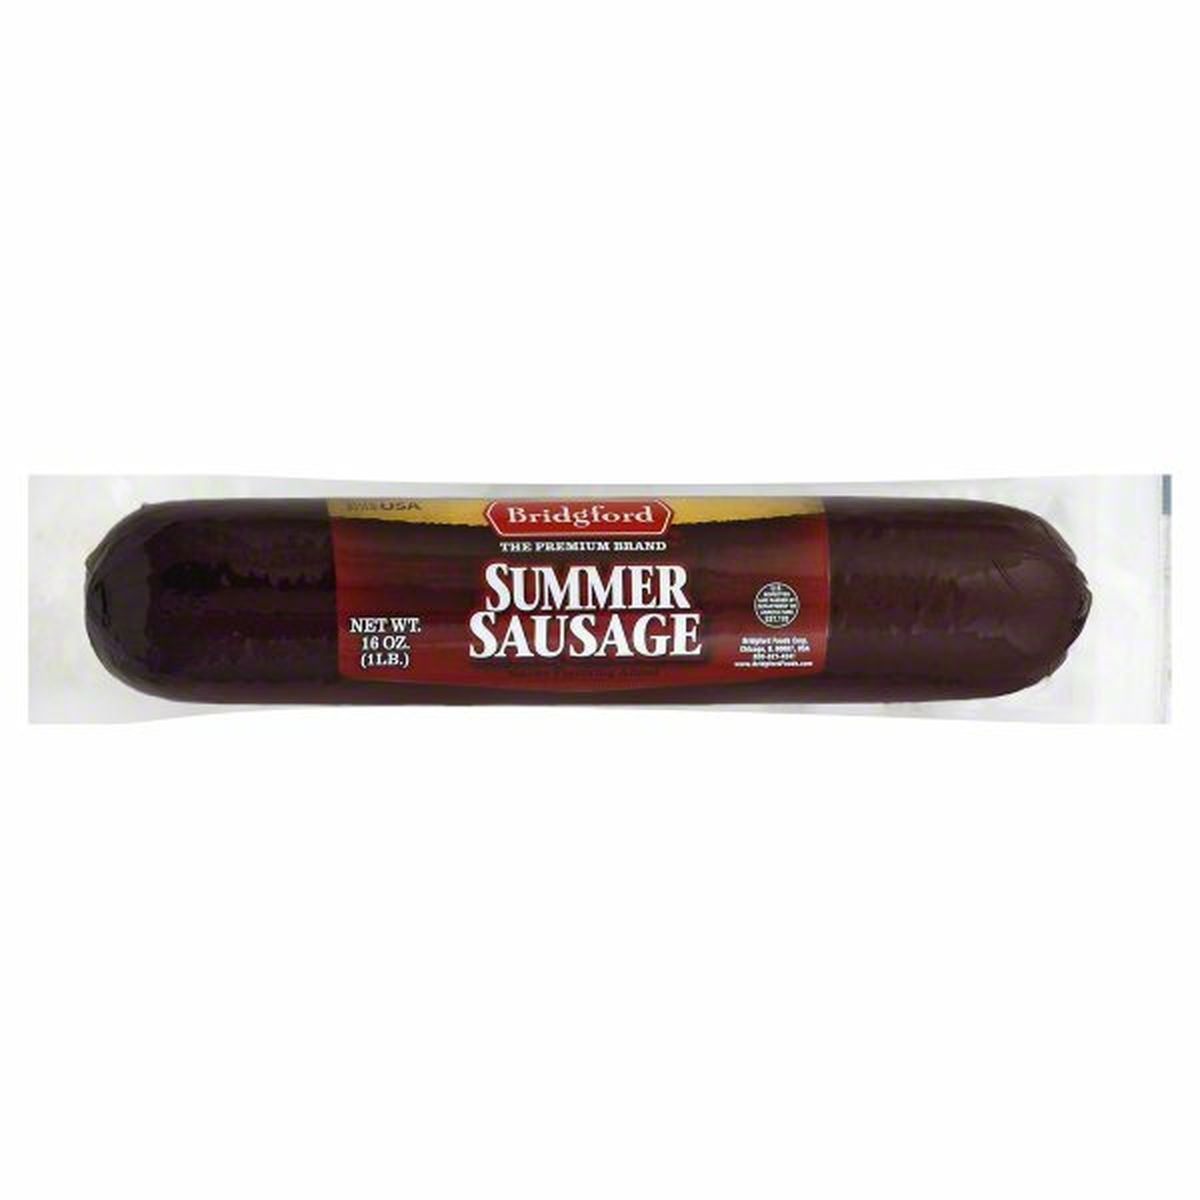 Calories in Bridgford Summer Sausage